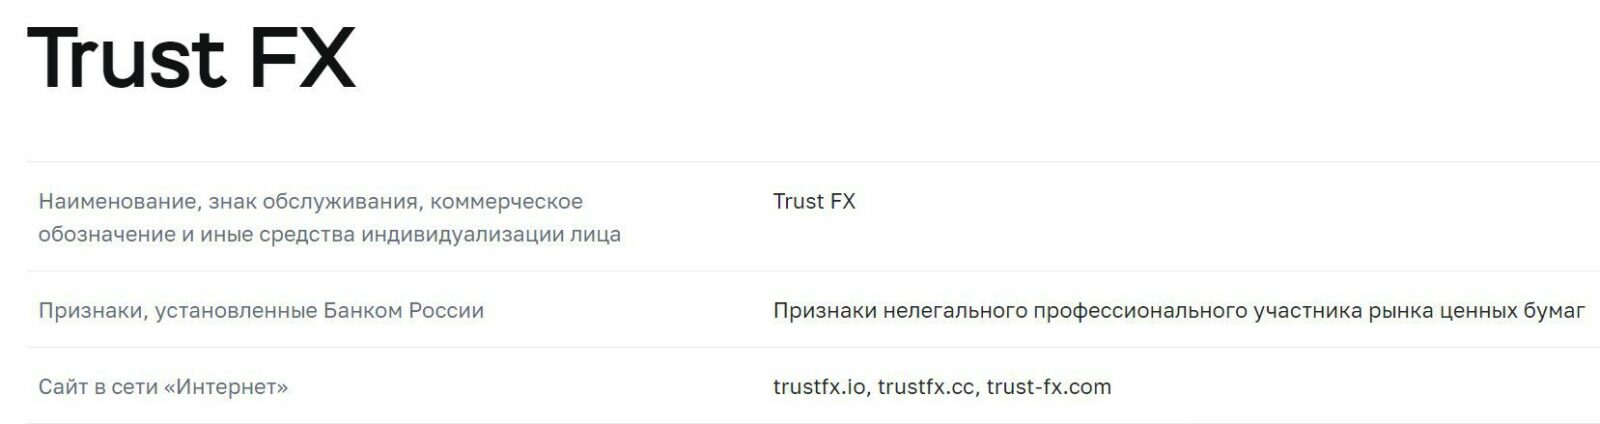 Trust FX отзывы